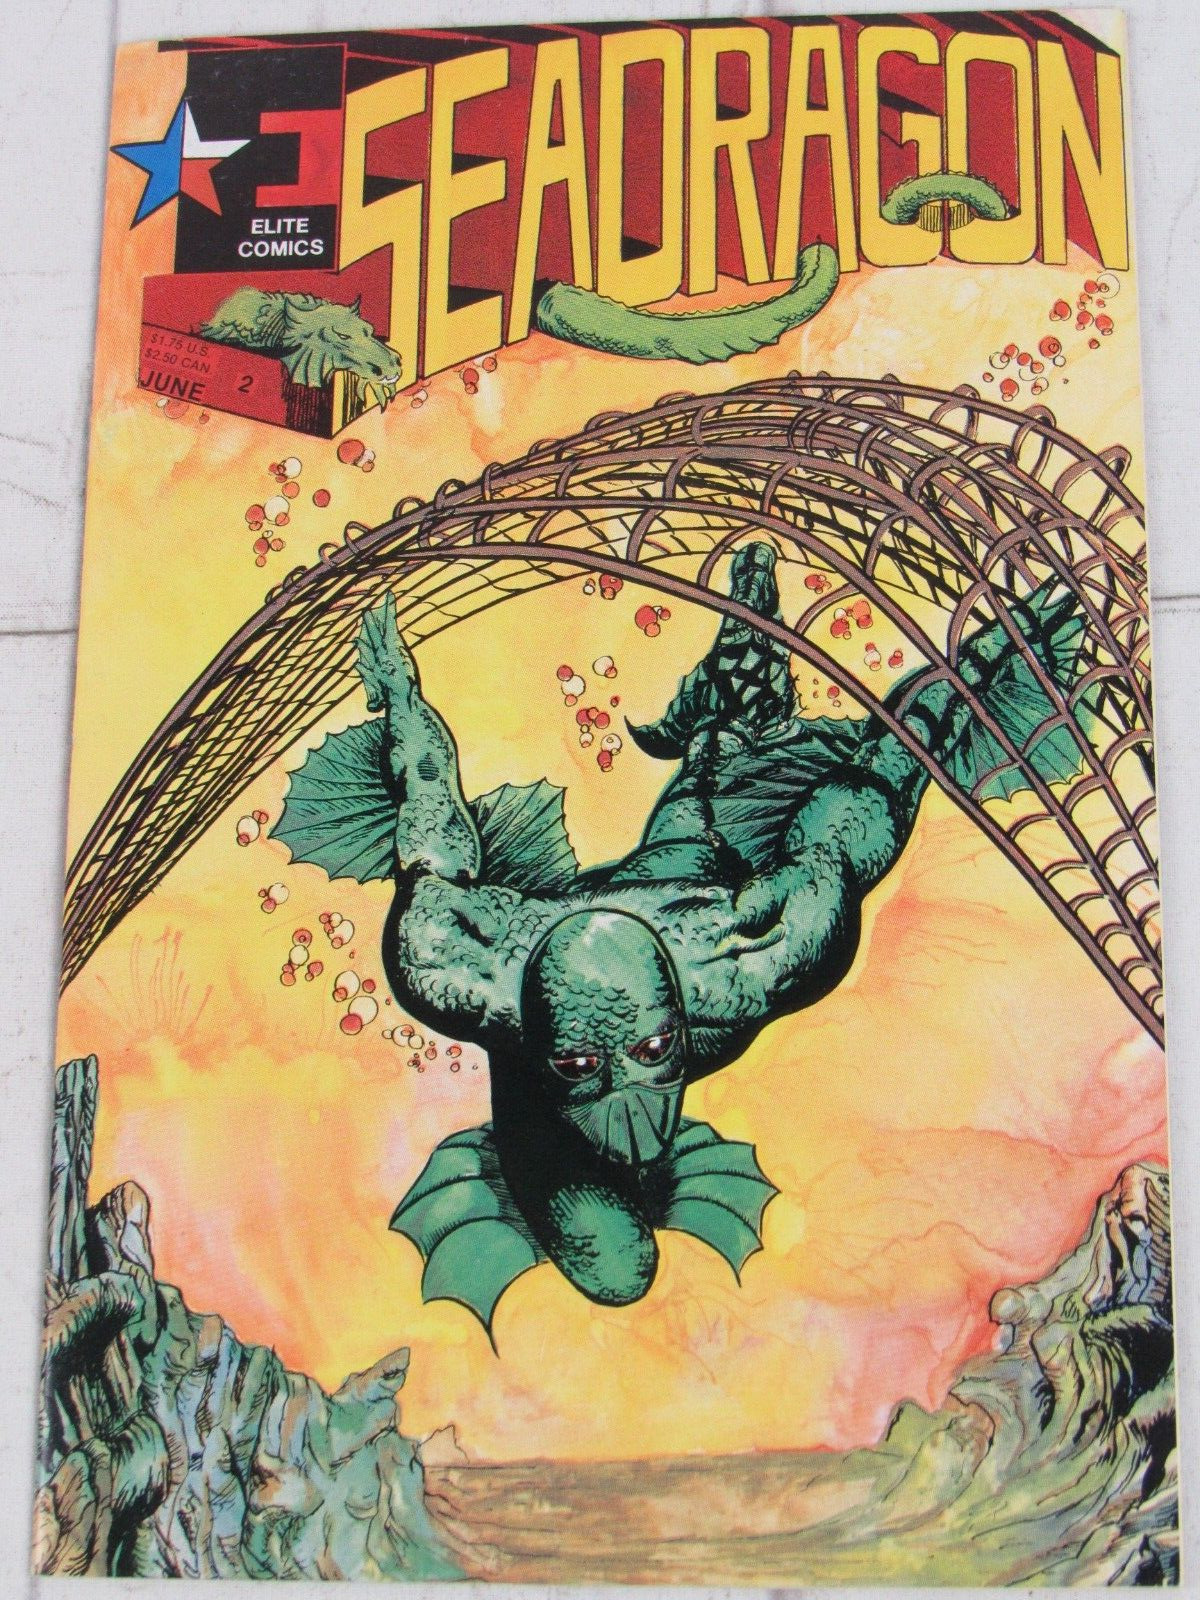 Seadragon #2 June 1986 Elite Comics